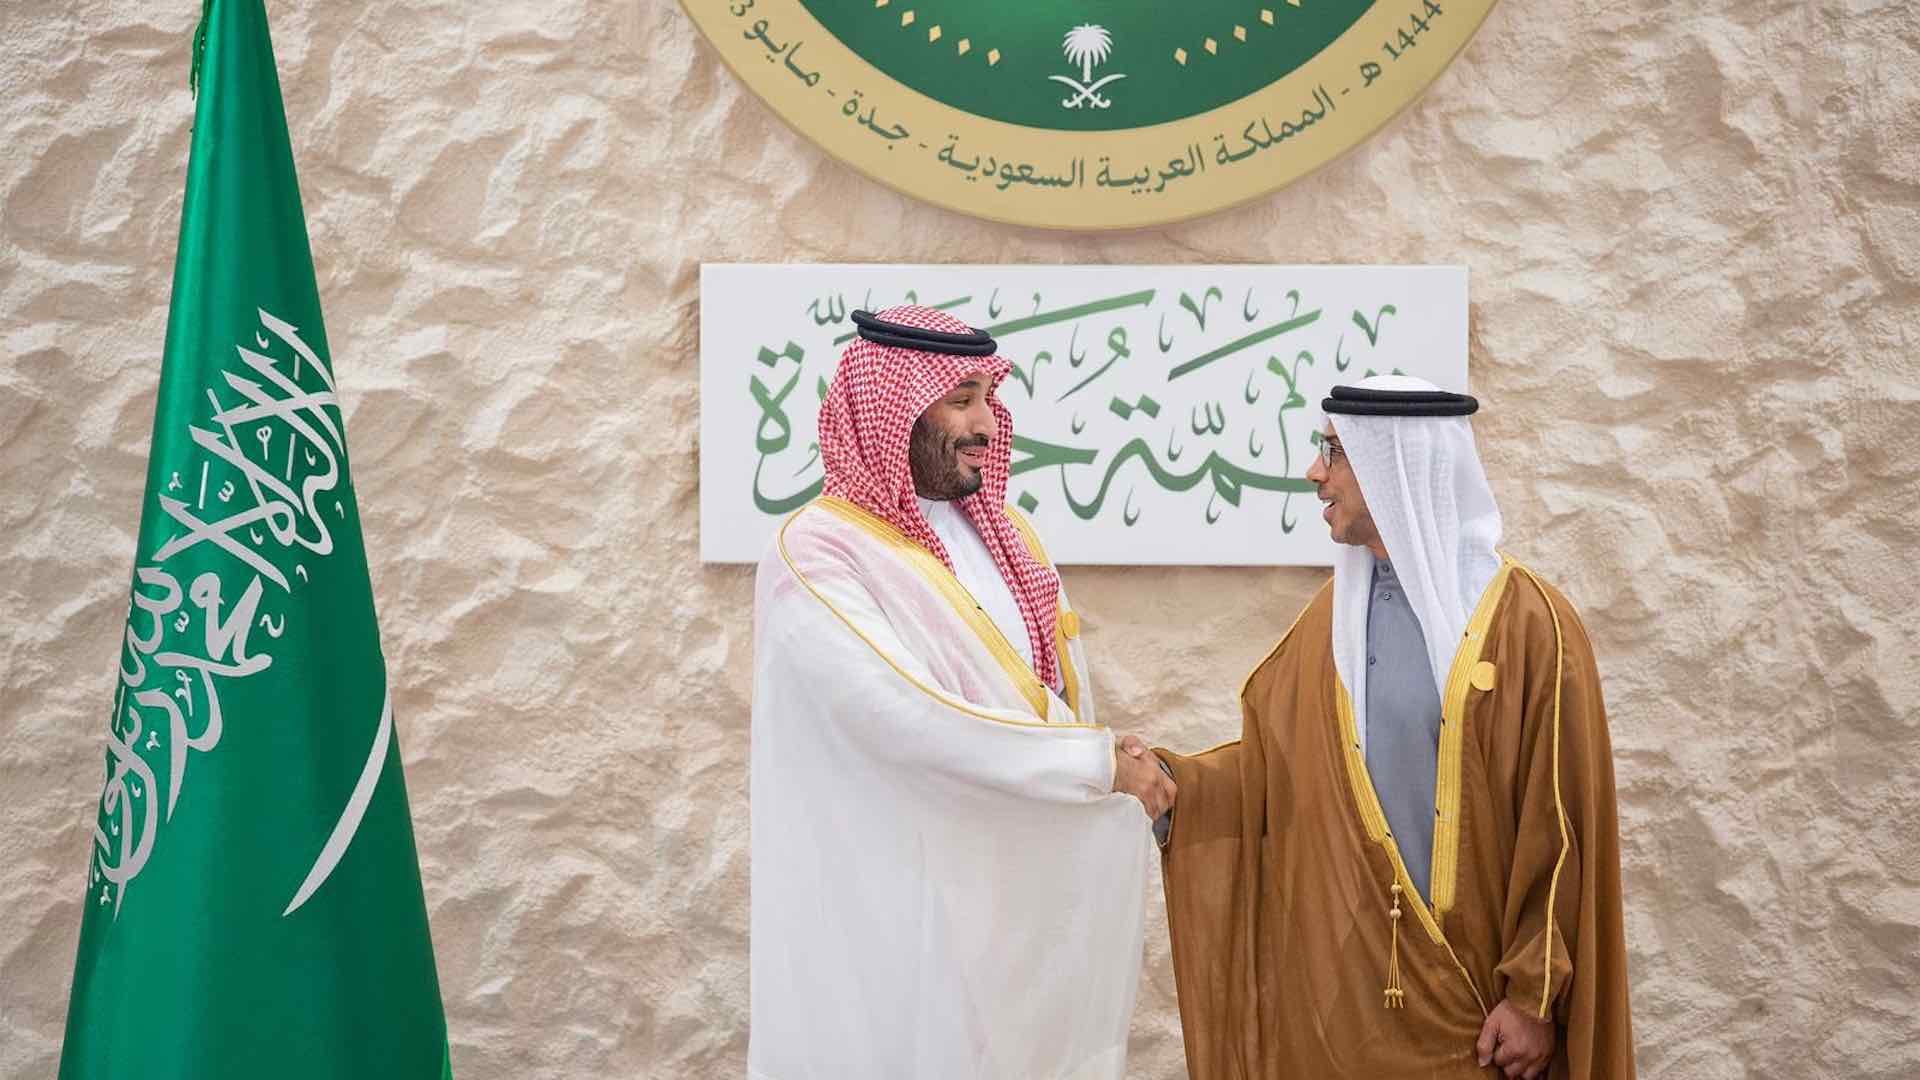 UAE commits to regional stability: Sheikh Mansour bin Zayed's key message at Arab summit